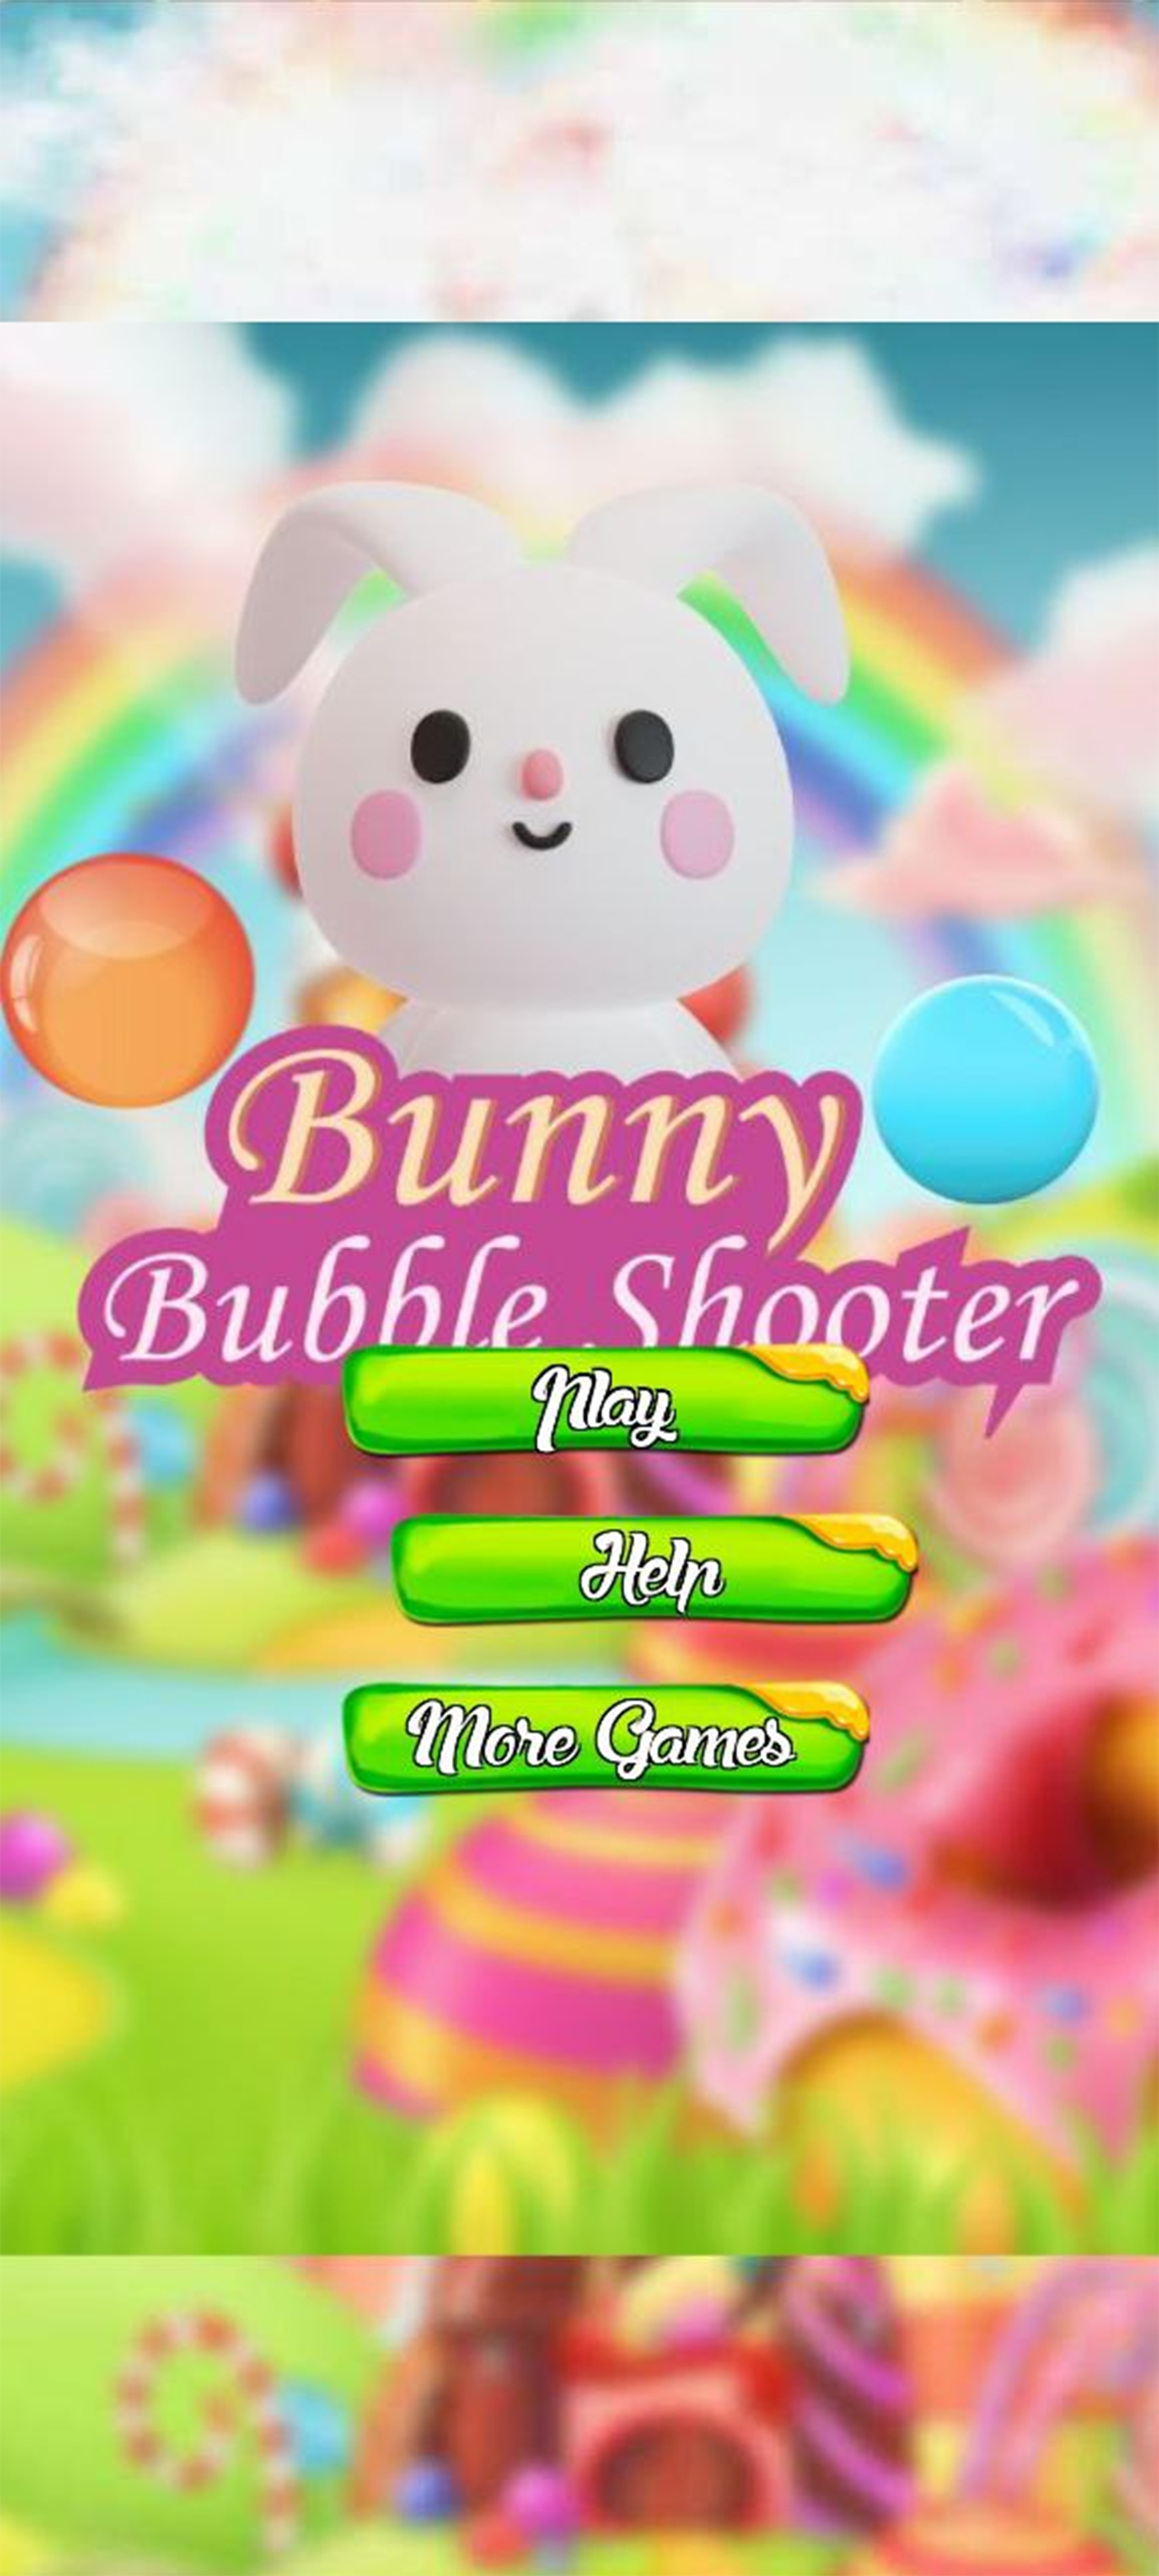 Bunny Bubble Shooter Game Screenshot